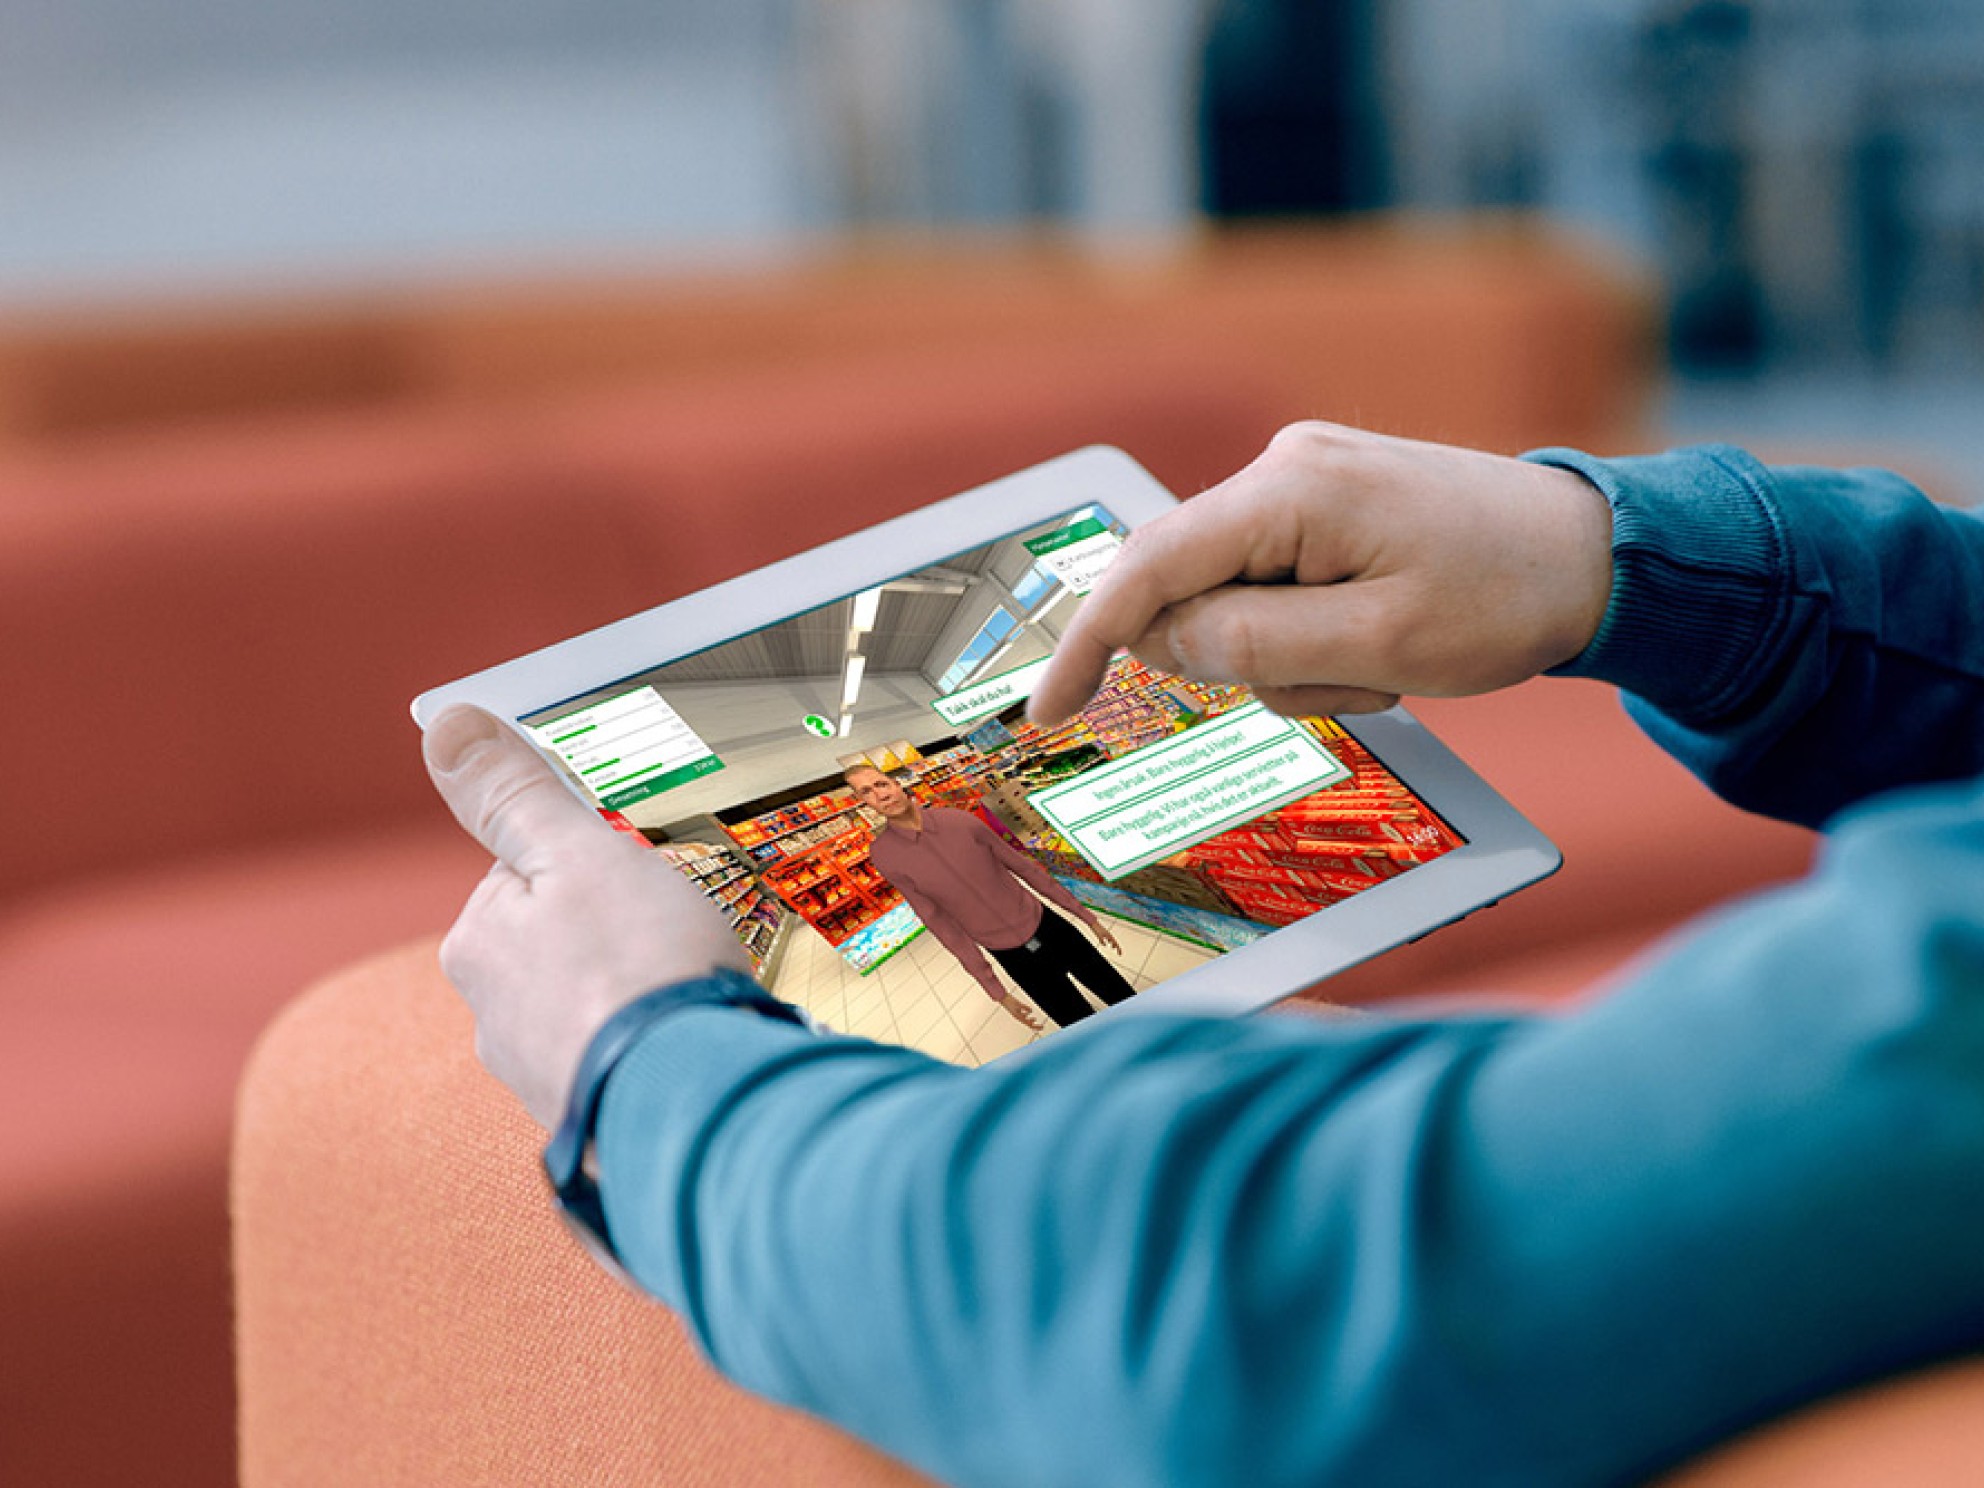 Man uses iPad with simulation-based training